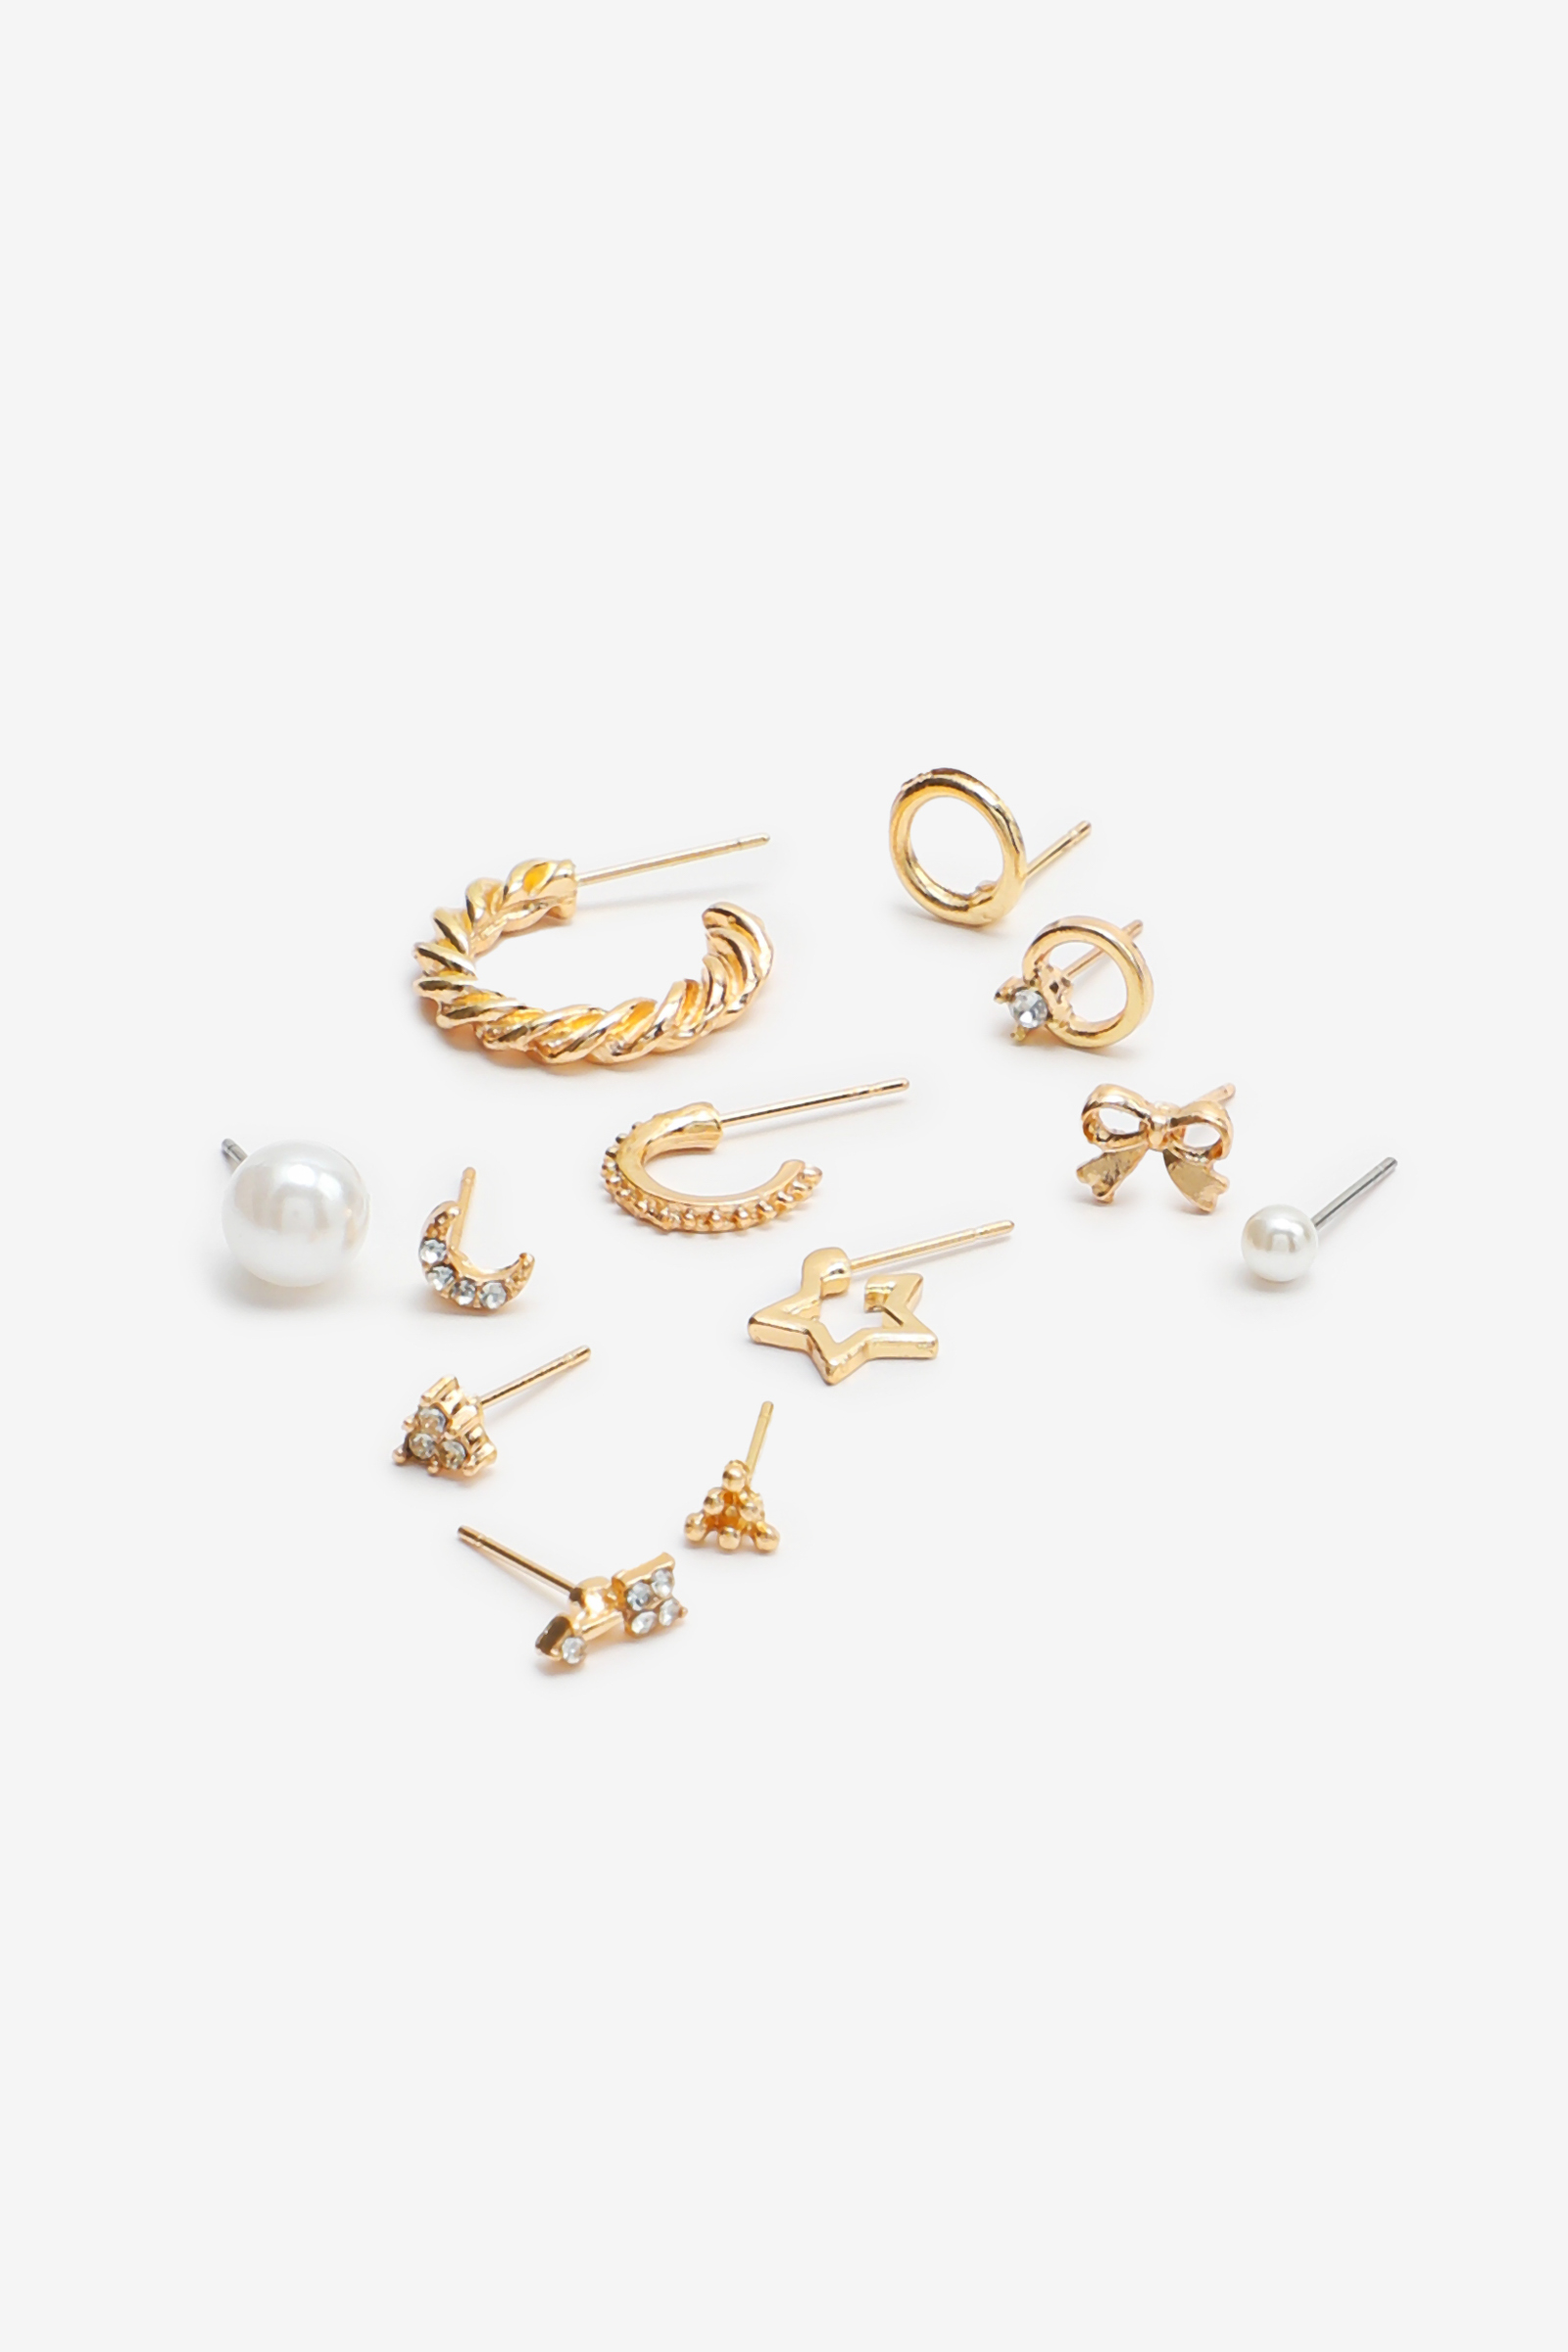 Pack of Assorted Earrings